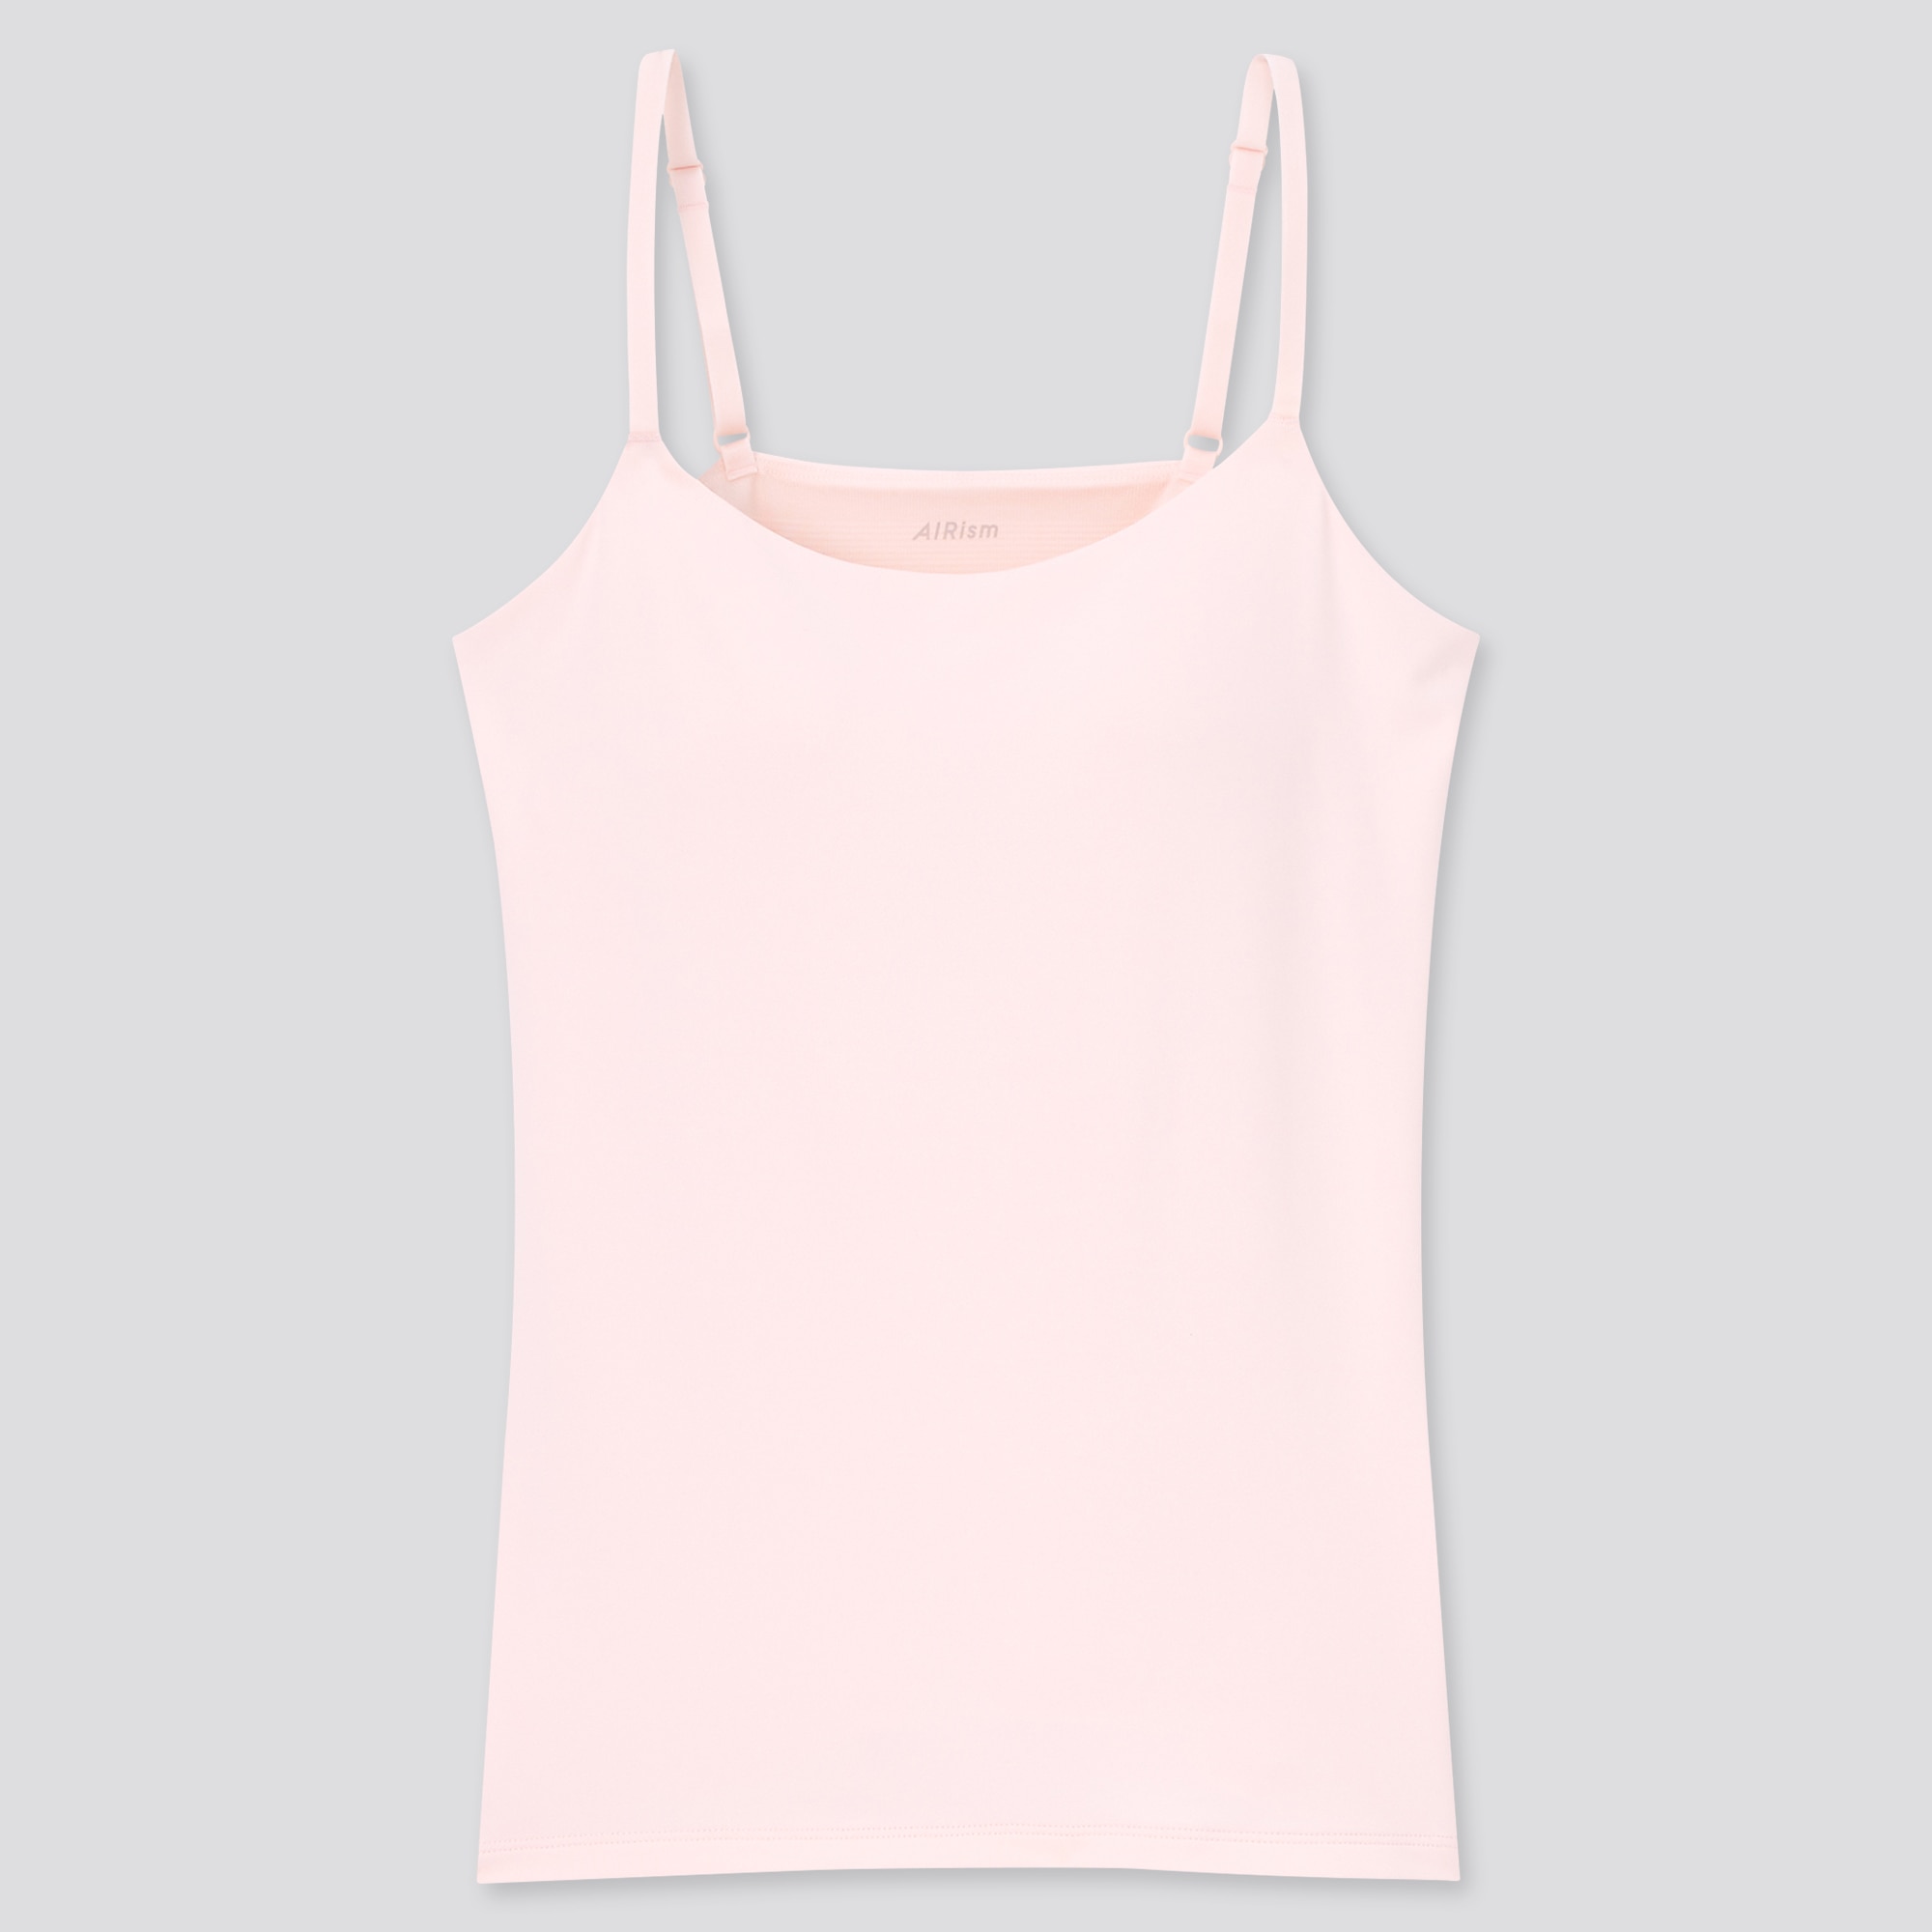 Uniqlo AIRism Tank Bra Top Women Medium Stripe Pink Gray - Deblu